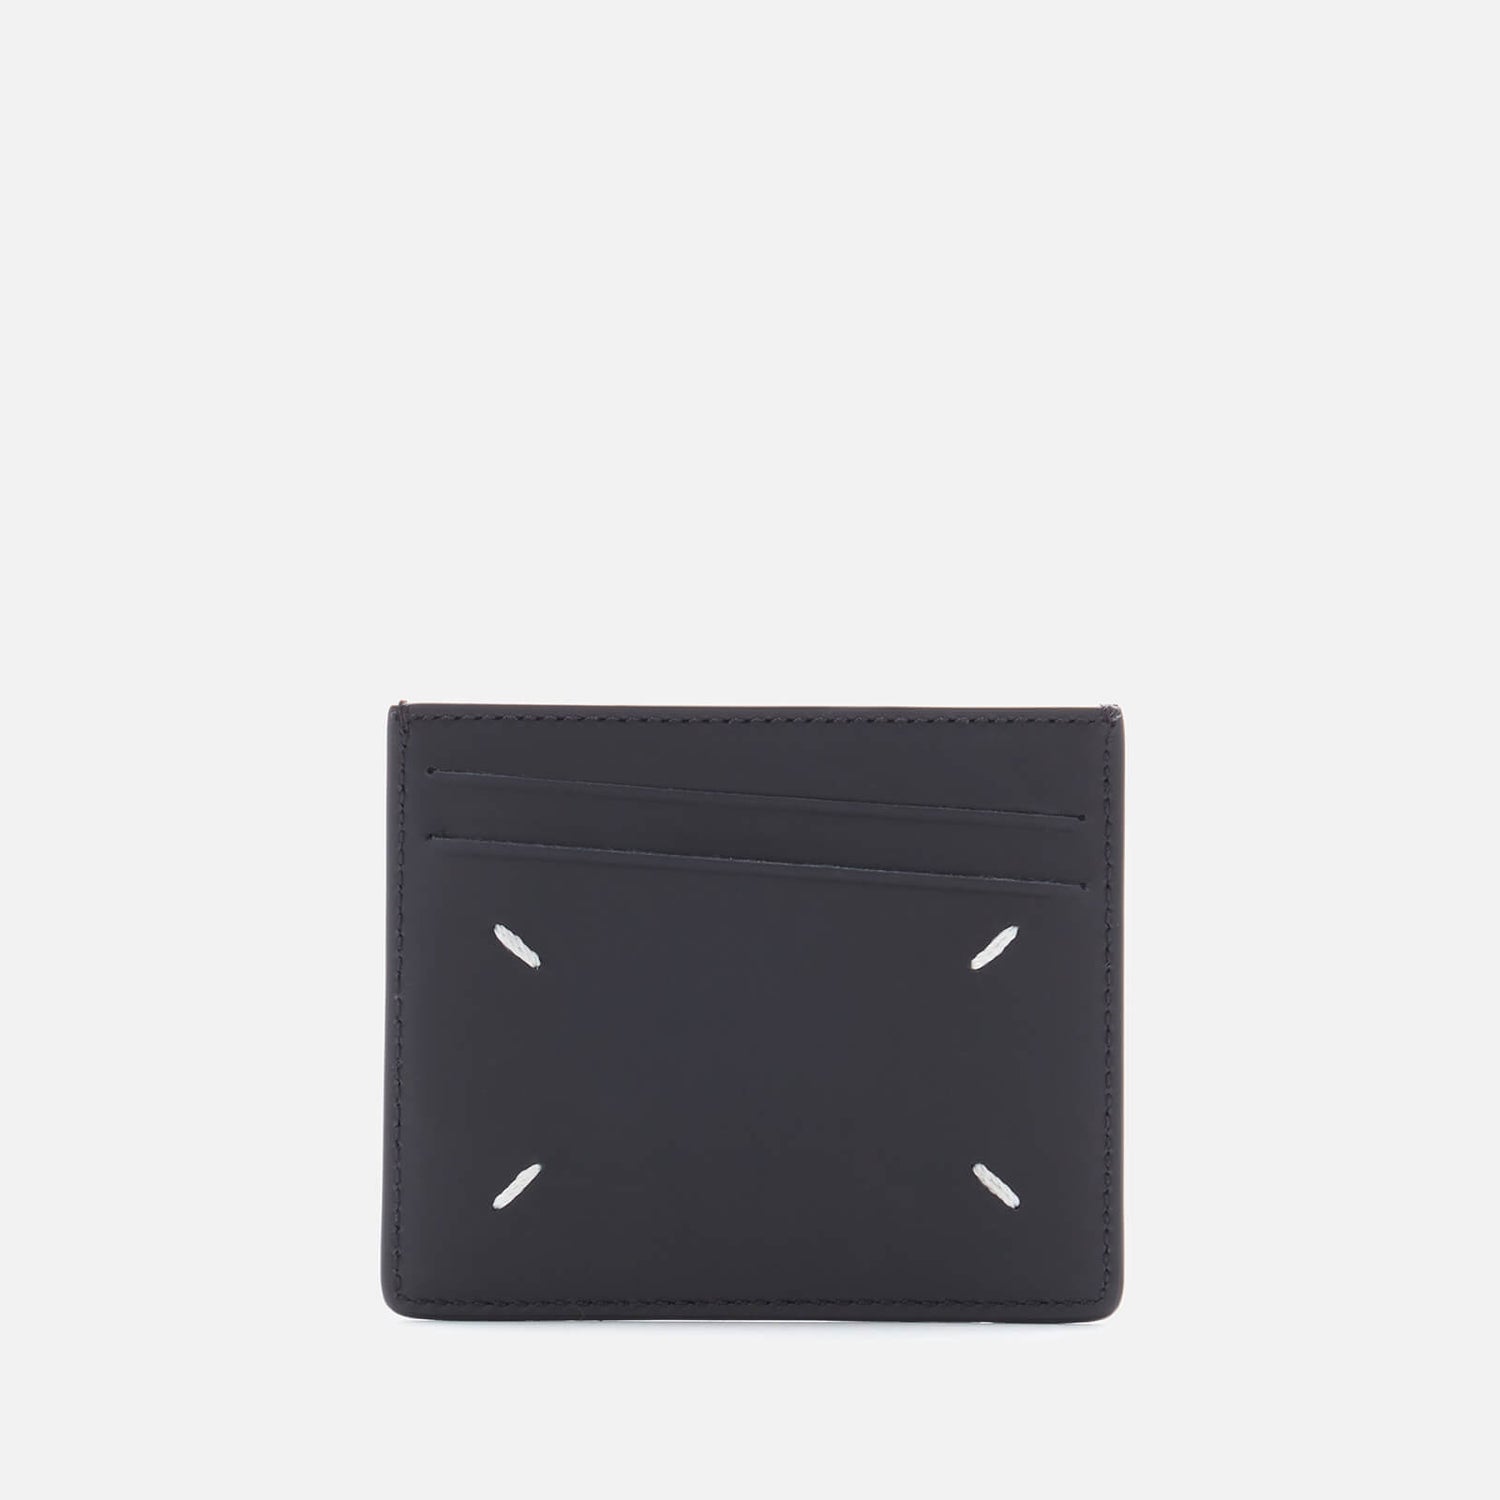 Maison Margiela Men's Leather Credit Card Case - Brown